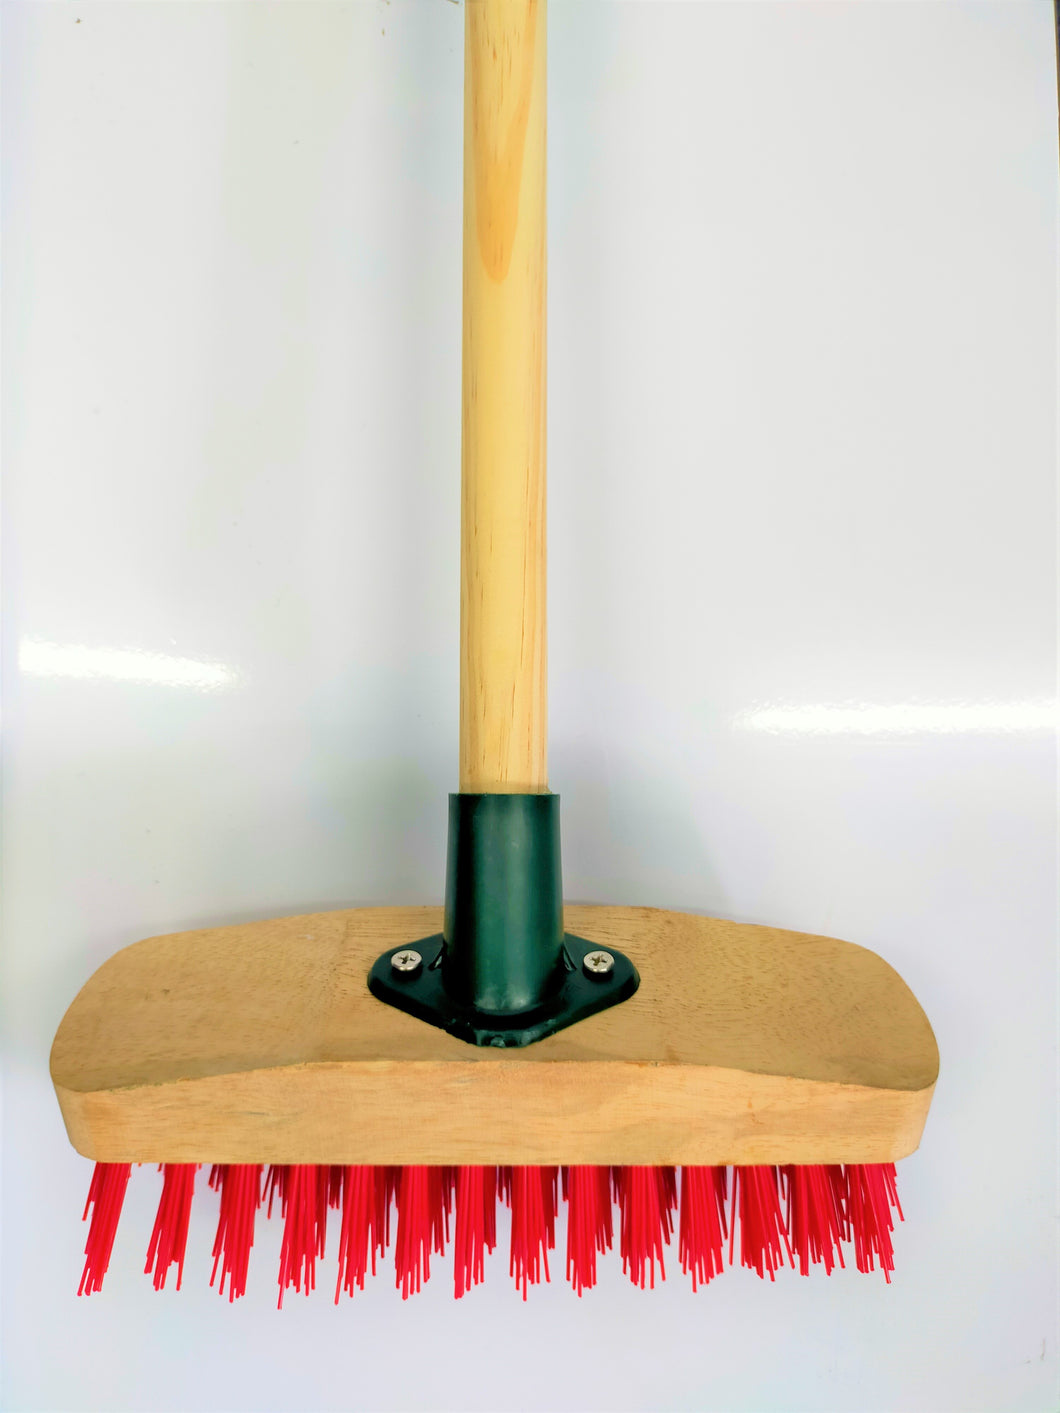 9” Deck Scrub Brush With 4’ Handle